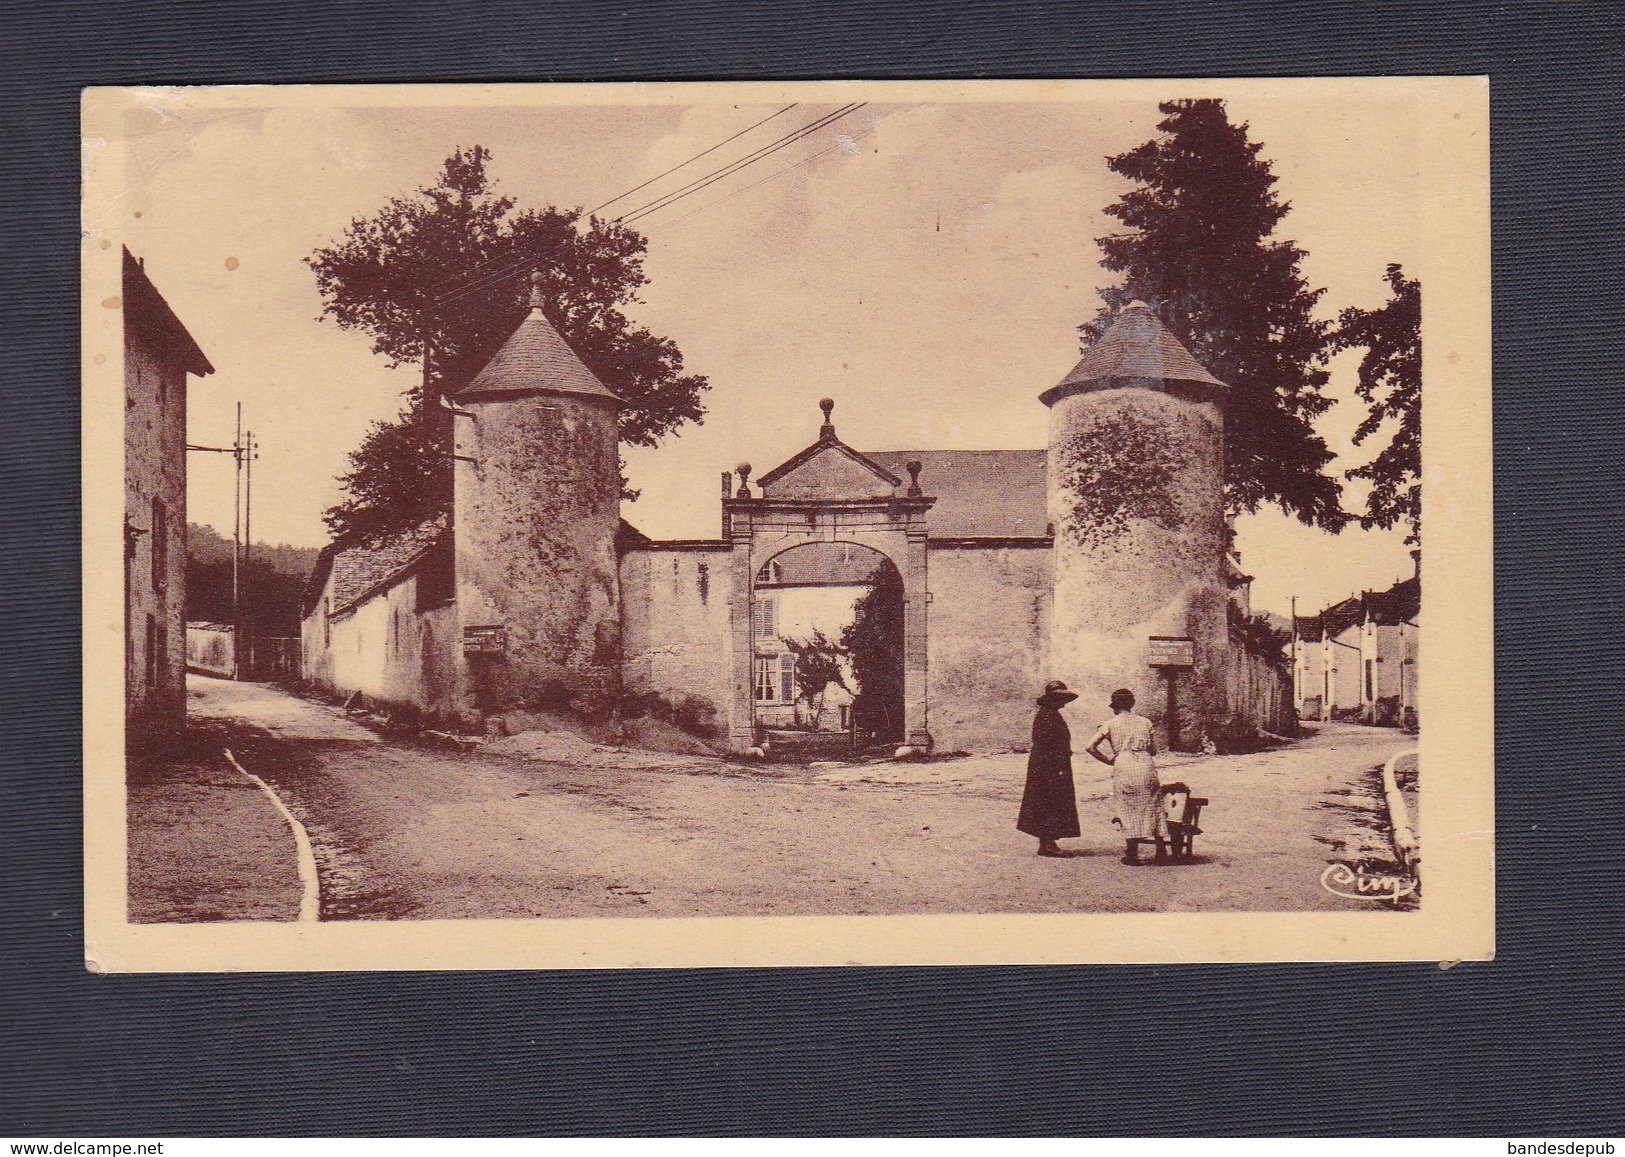 Vente Immediate Doulaincourt (52) Chateau Du Montrol ( Coll. Vadon Tabac ) - Doulaincourt